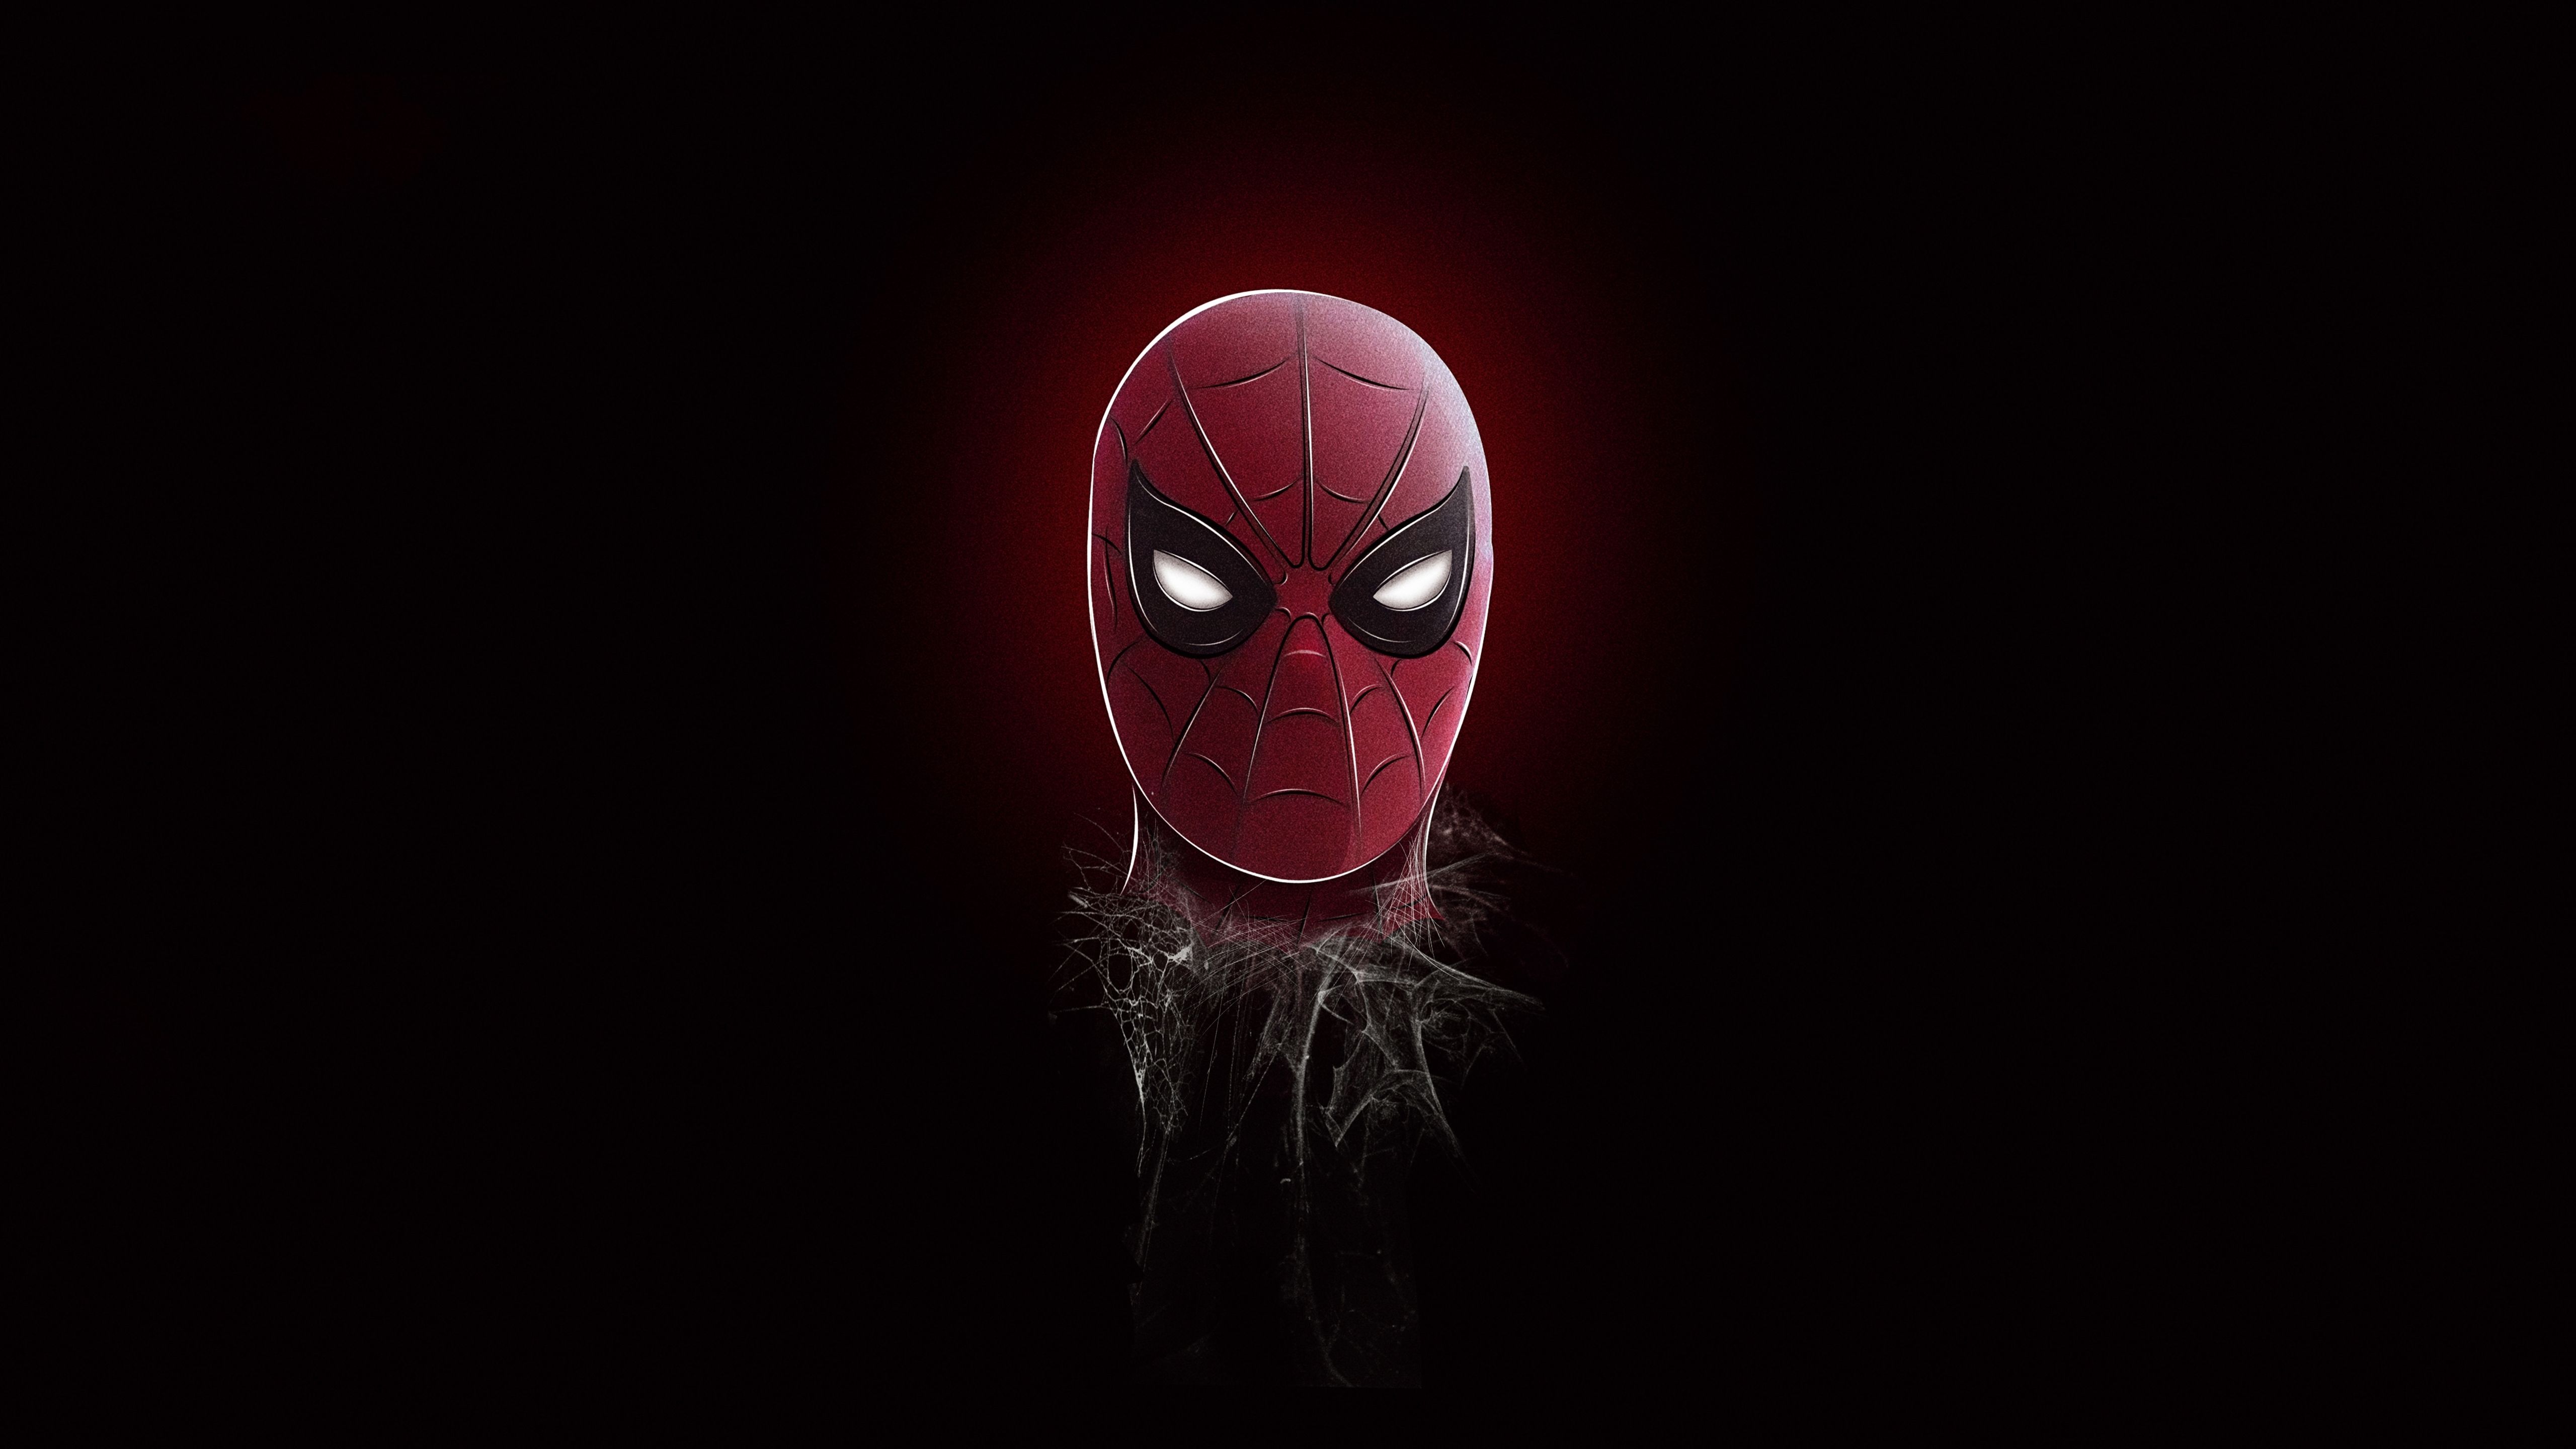 Movie, Spiderman, mask, black Wallpaper & Background Image